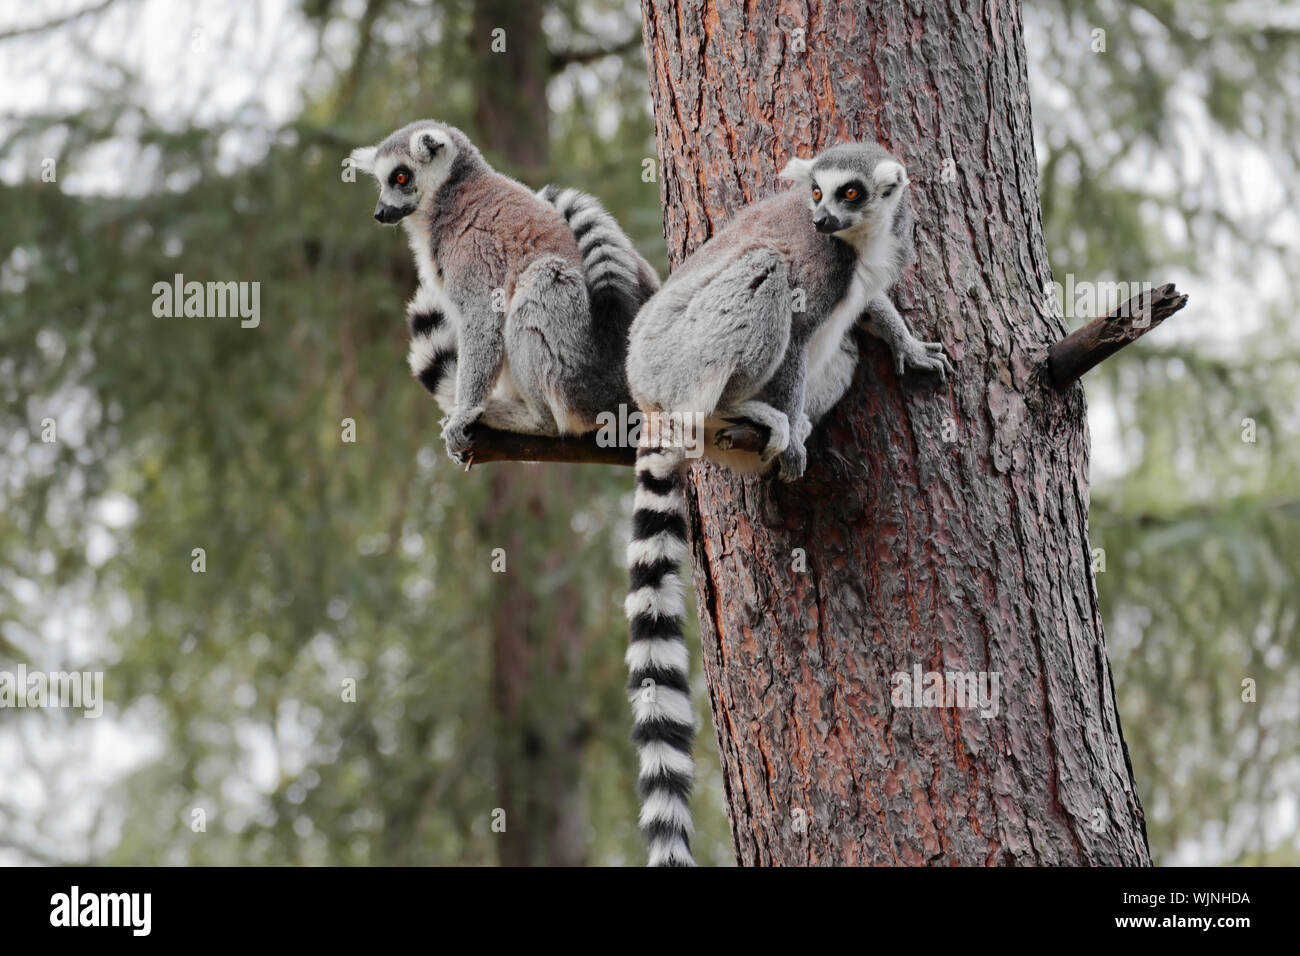 Dos lemures de cola de anillo - Lemur catta - L. catta - sobre un tronco de pino con textura de corteza distintiva Foto de stock